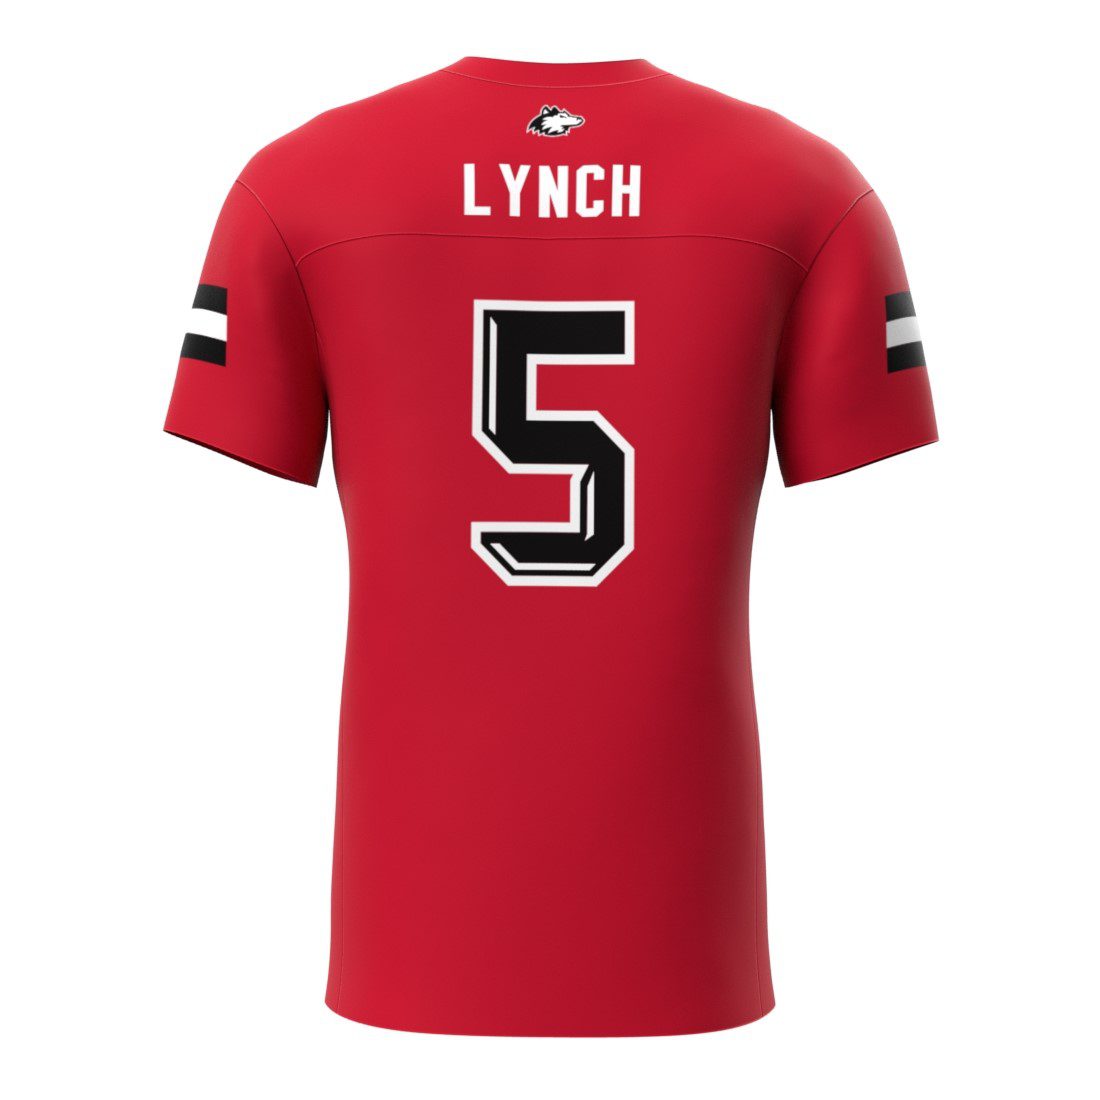 Justin Lynch NIU Replica Red Jersey Back